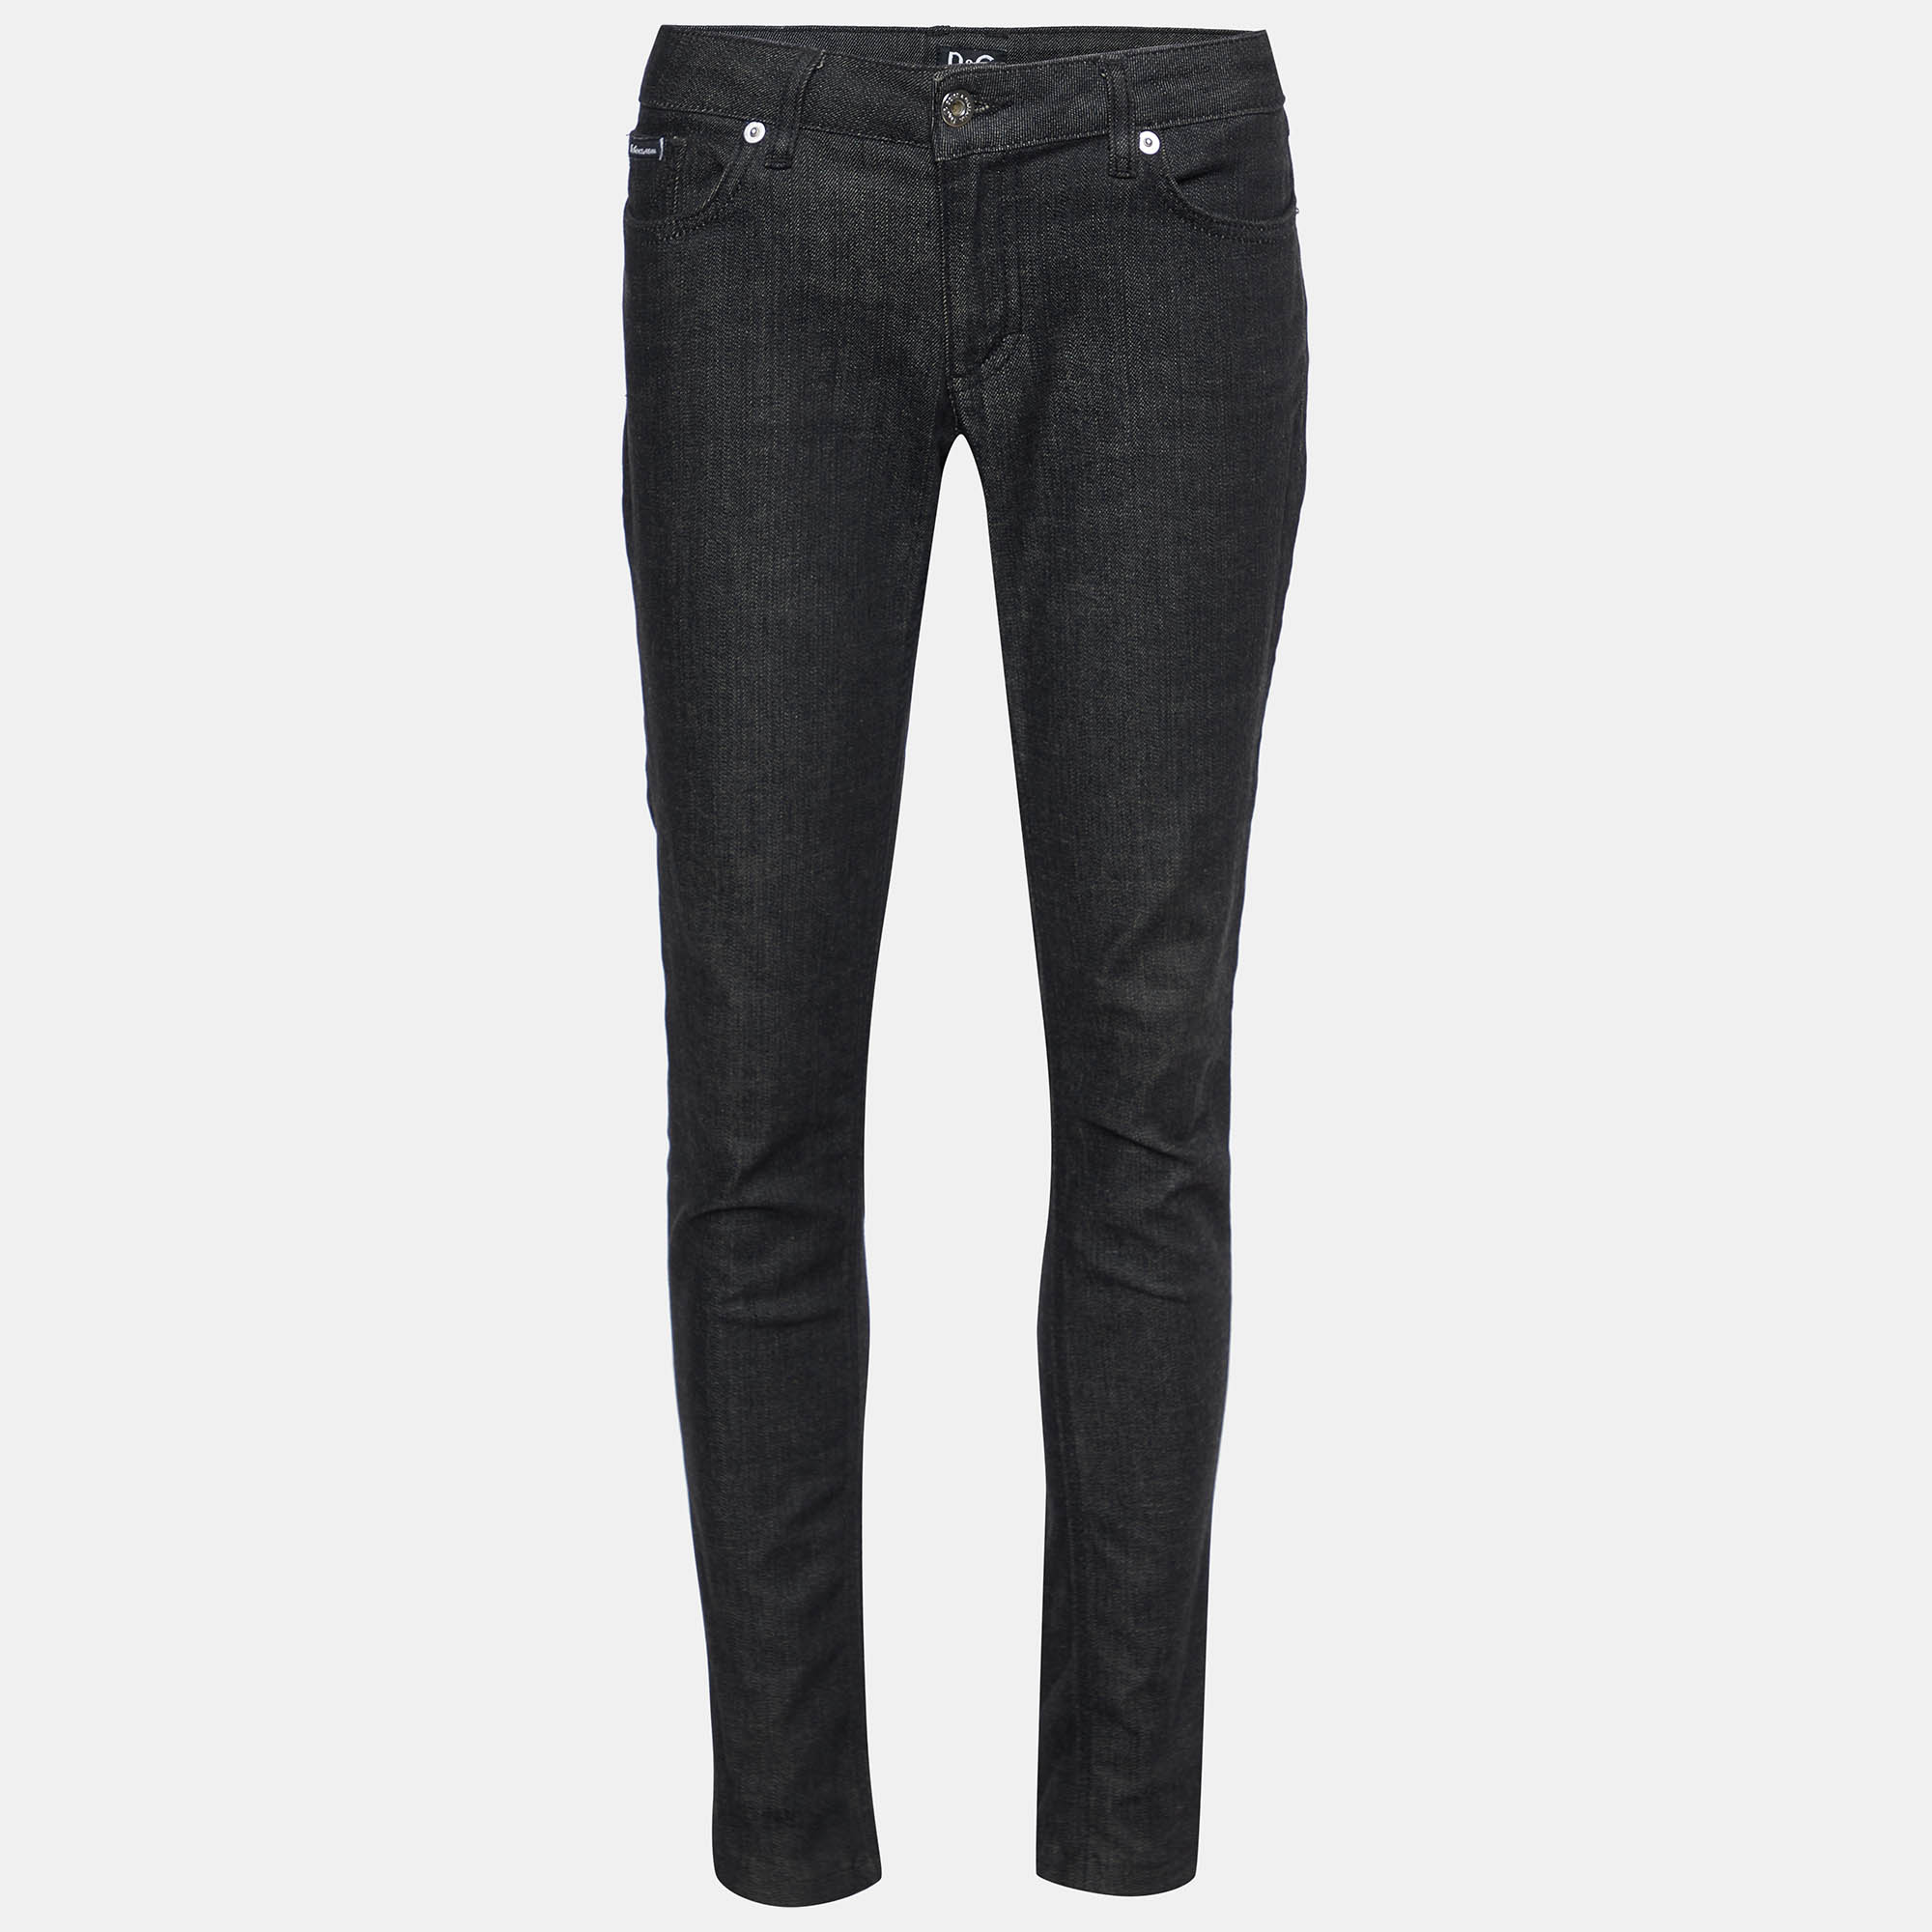 Pre-owned D & G Black Denim Slim Fit Jeans M/waist 32"